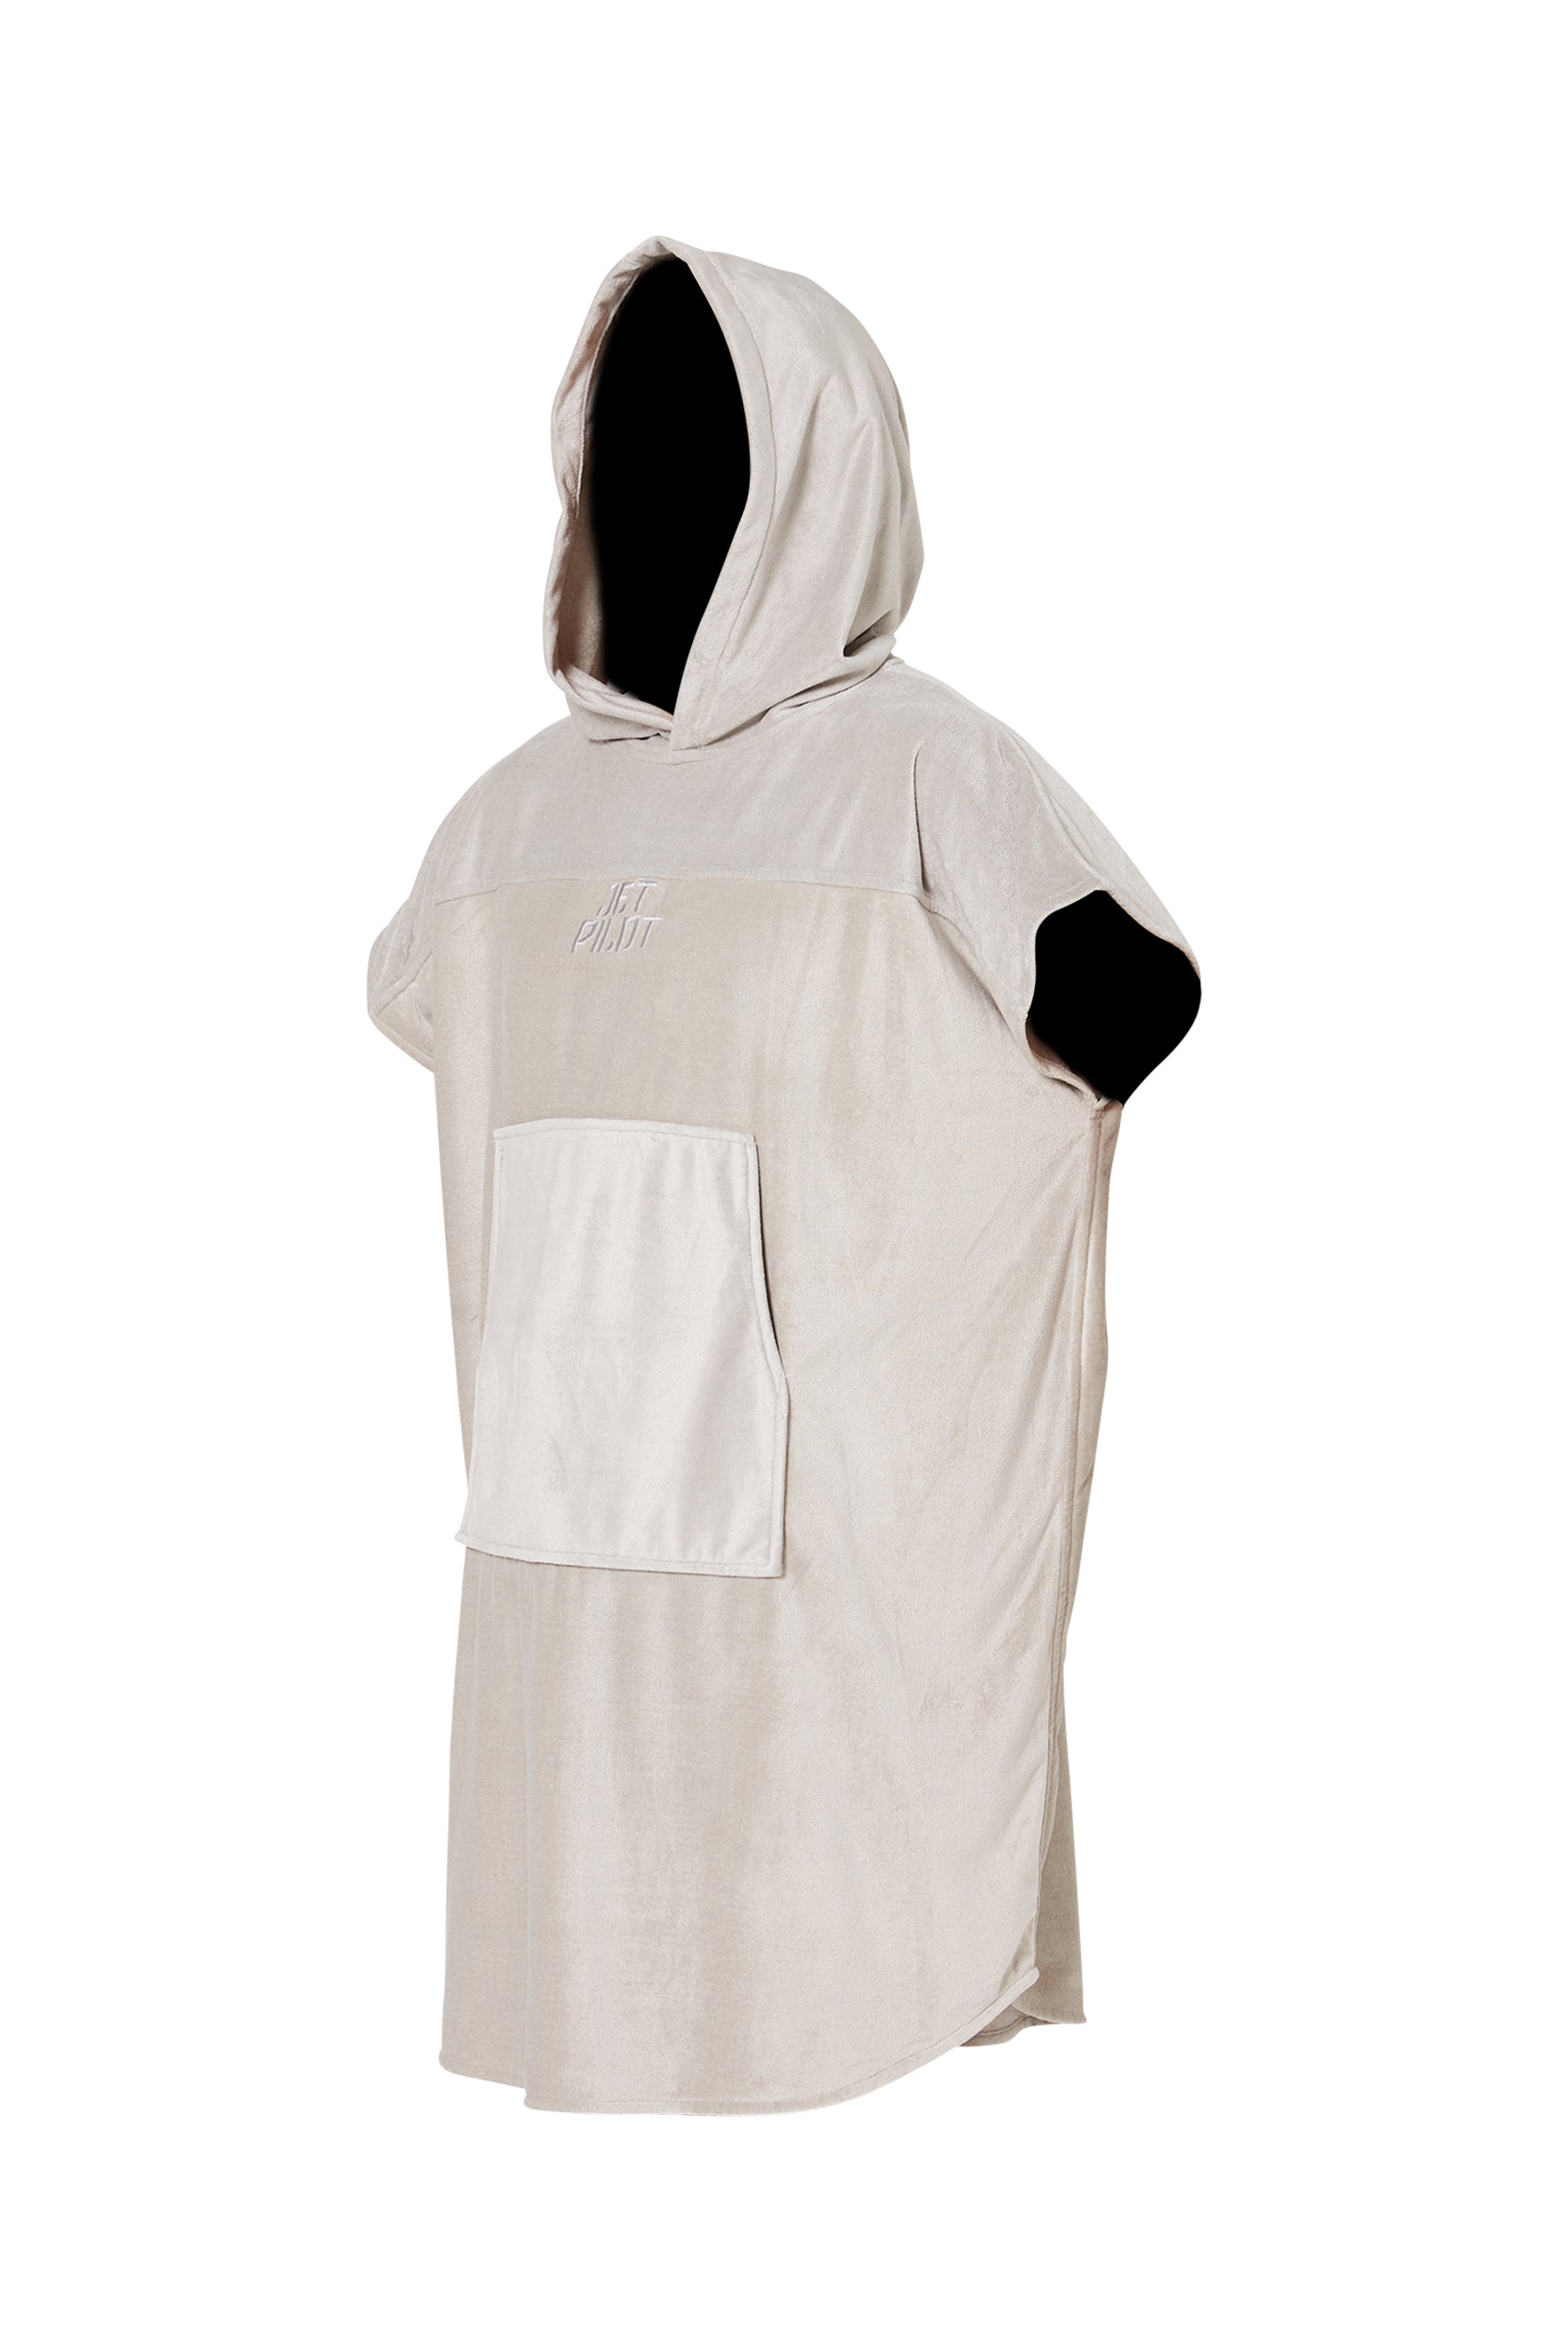 Jetpilot Venture Unisex Hoodie Towel - Grey Lifestyle 1